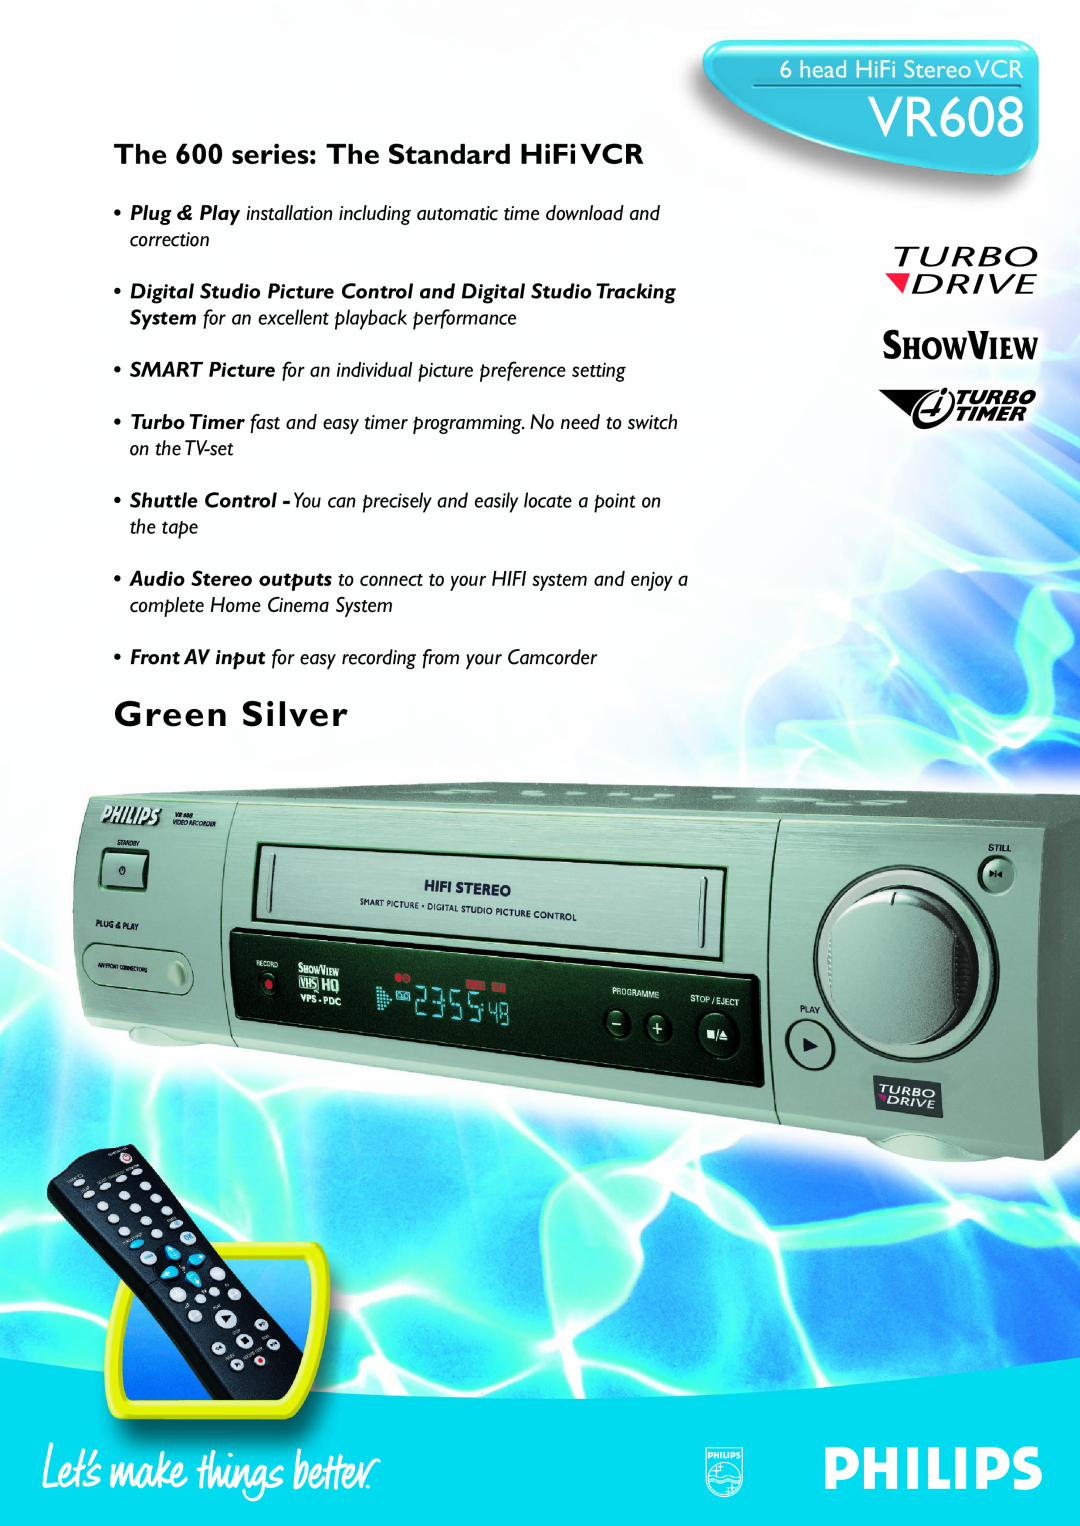 Philips manual VR608/07, head HiFi Stereo VCR, Silver Shadow, The 600 series The Standard HiFi VCR 